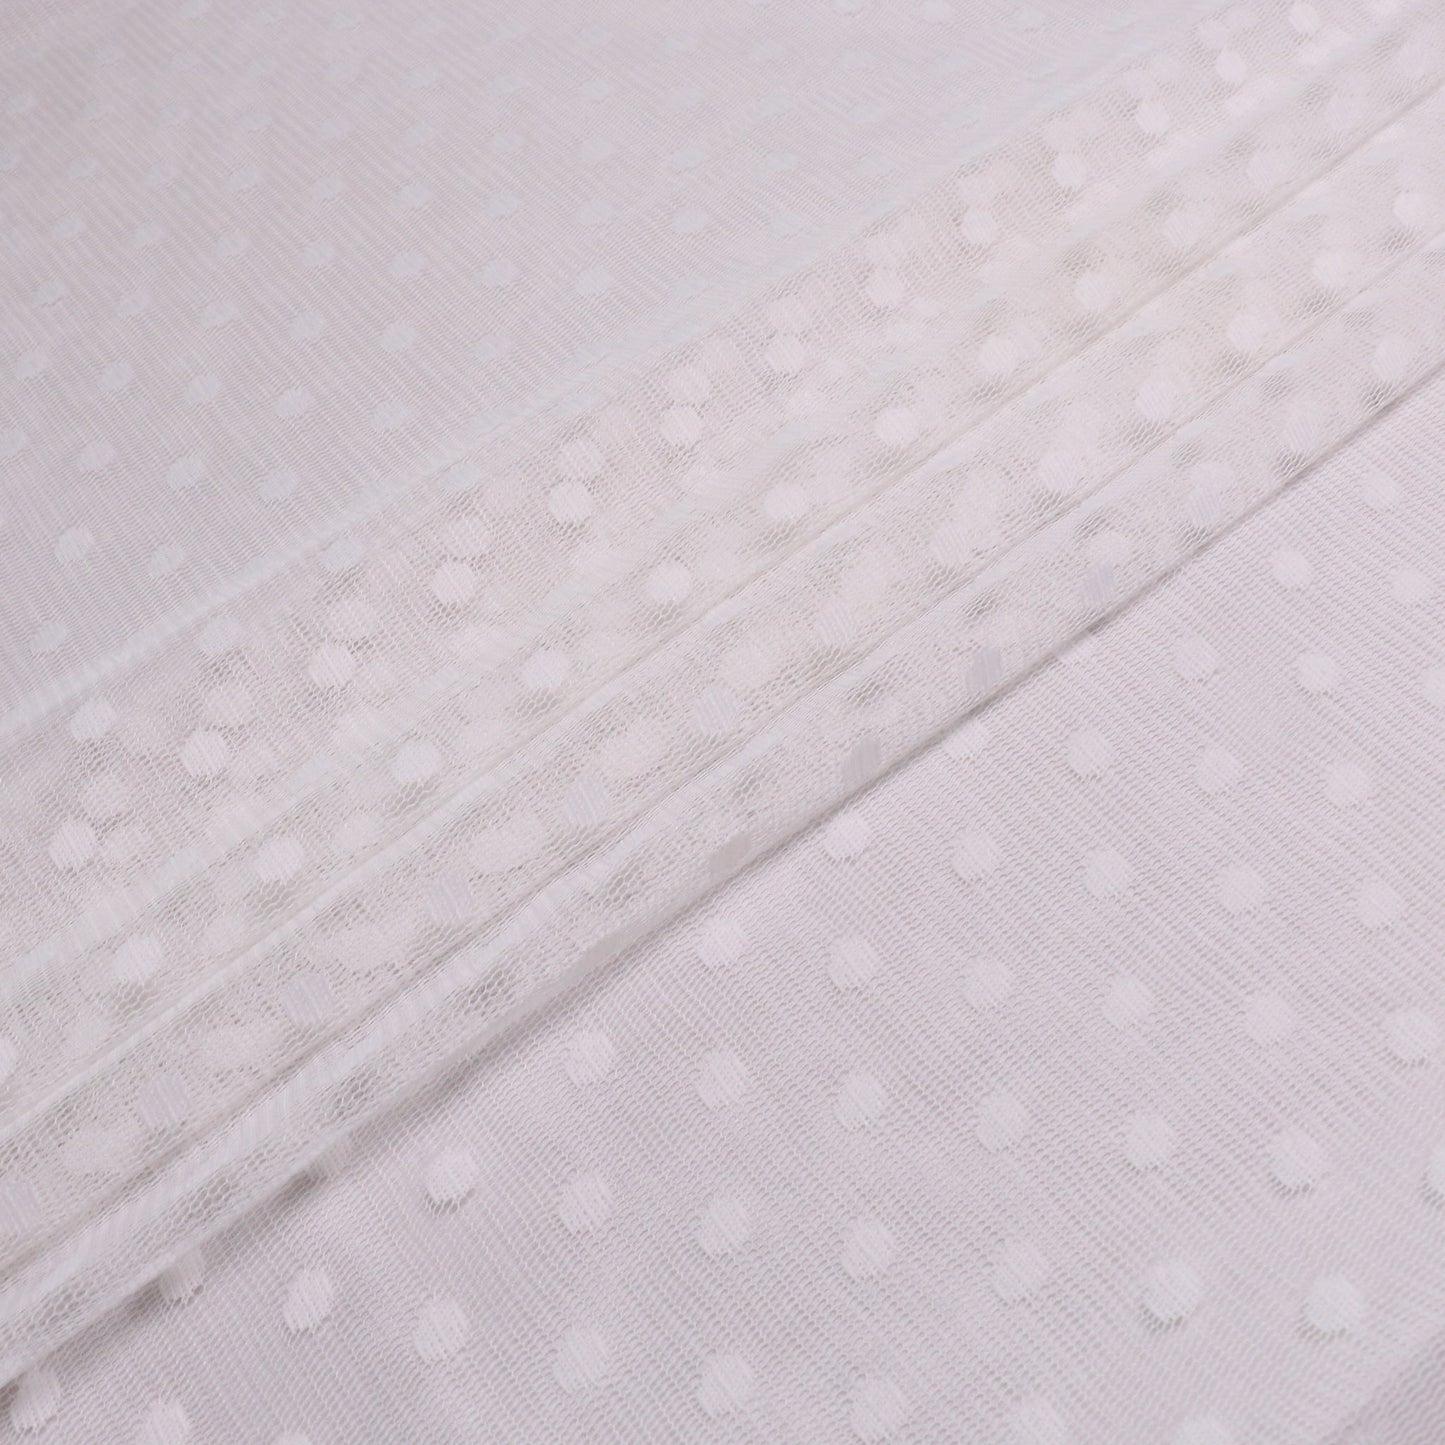 folded white netting mesh fabric with polka dot pattern